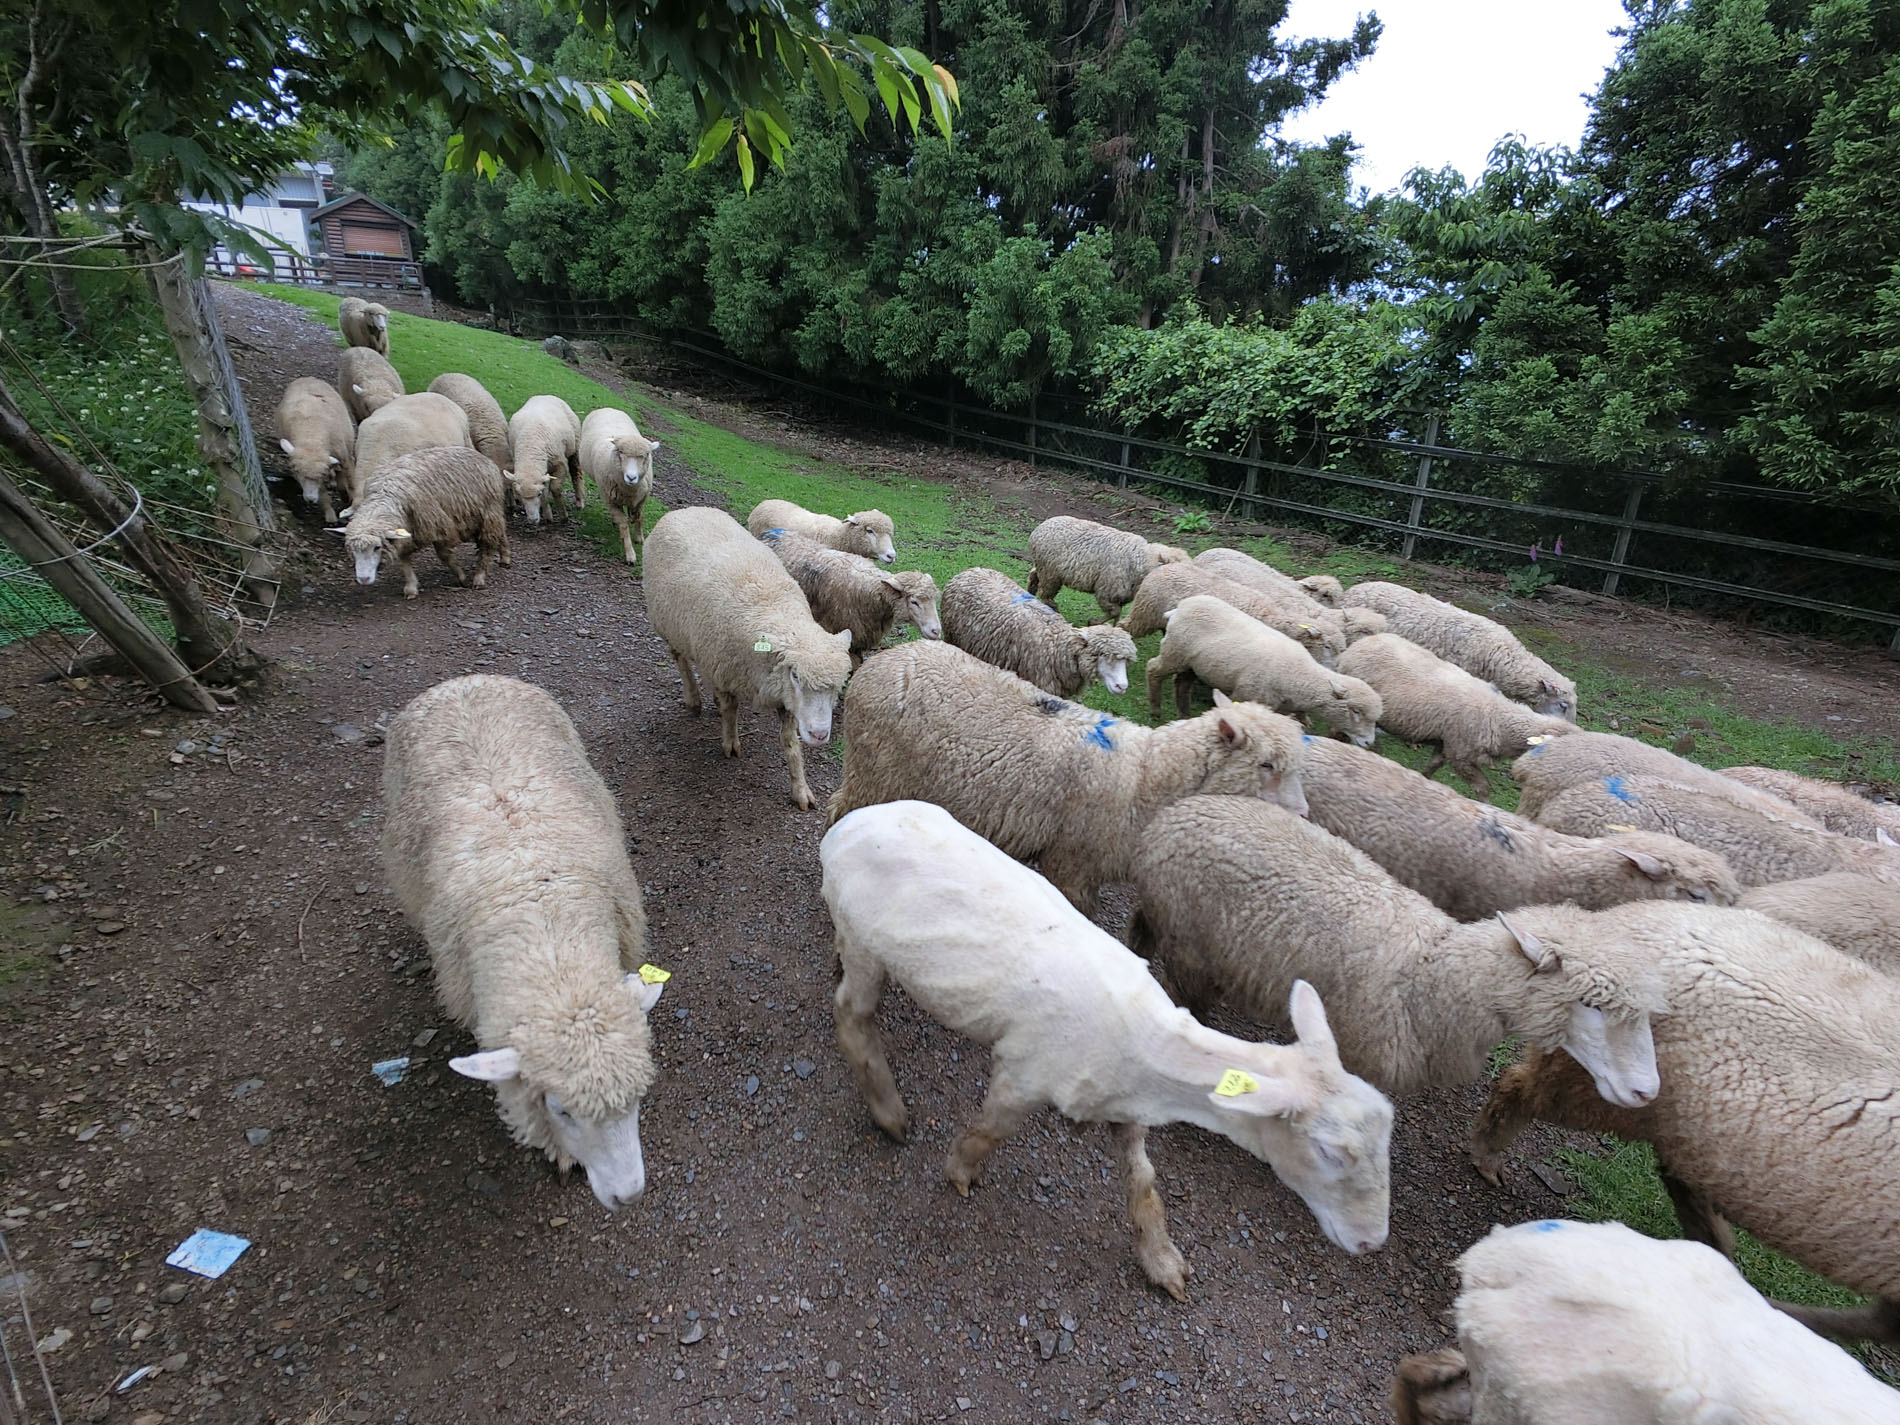 Sheep shearing at Cingjing Farm